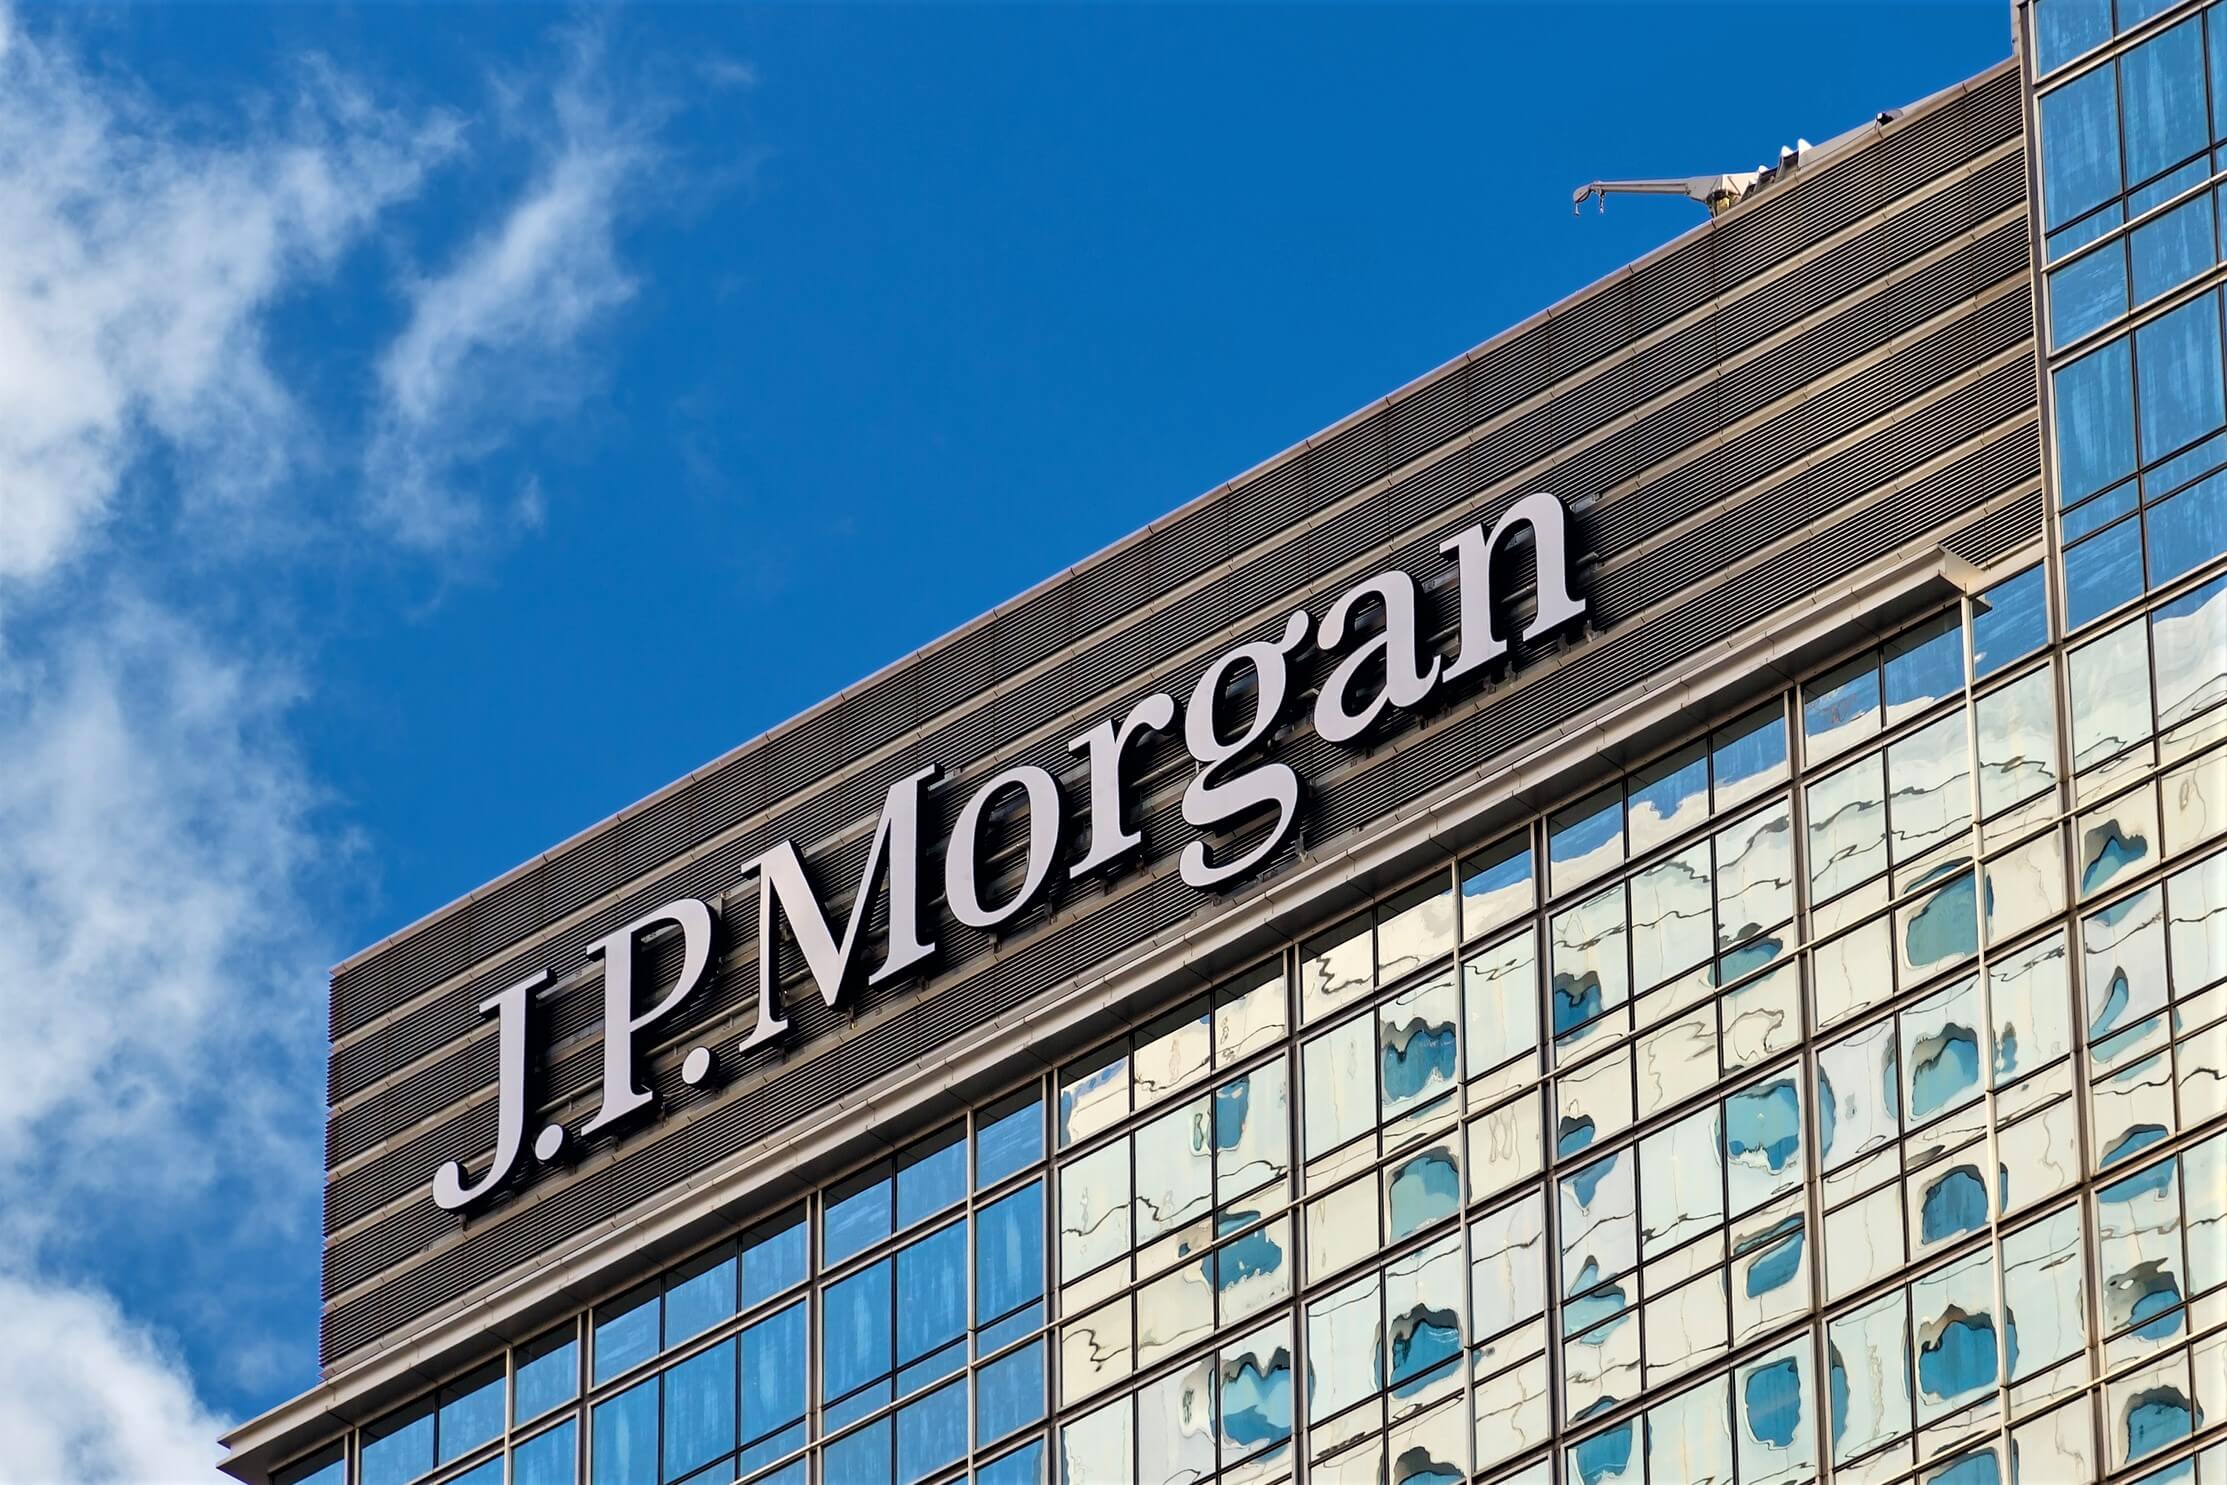 S p banking. Джи пи Морган банк. JPMORGAN Chase & co. Банк Морган США. Jp Morgan Chase Москва.